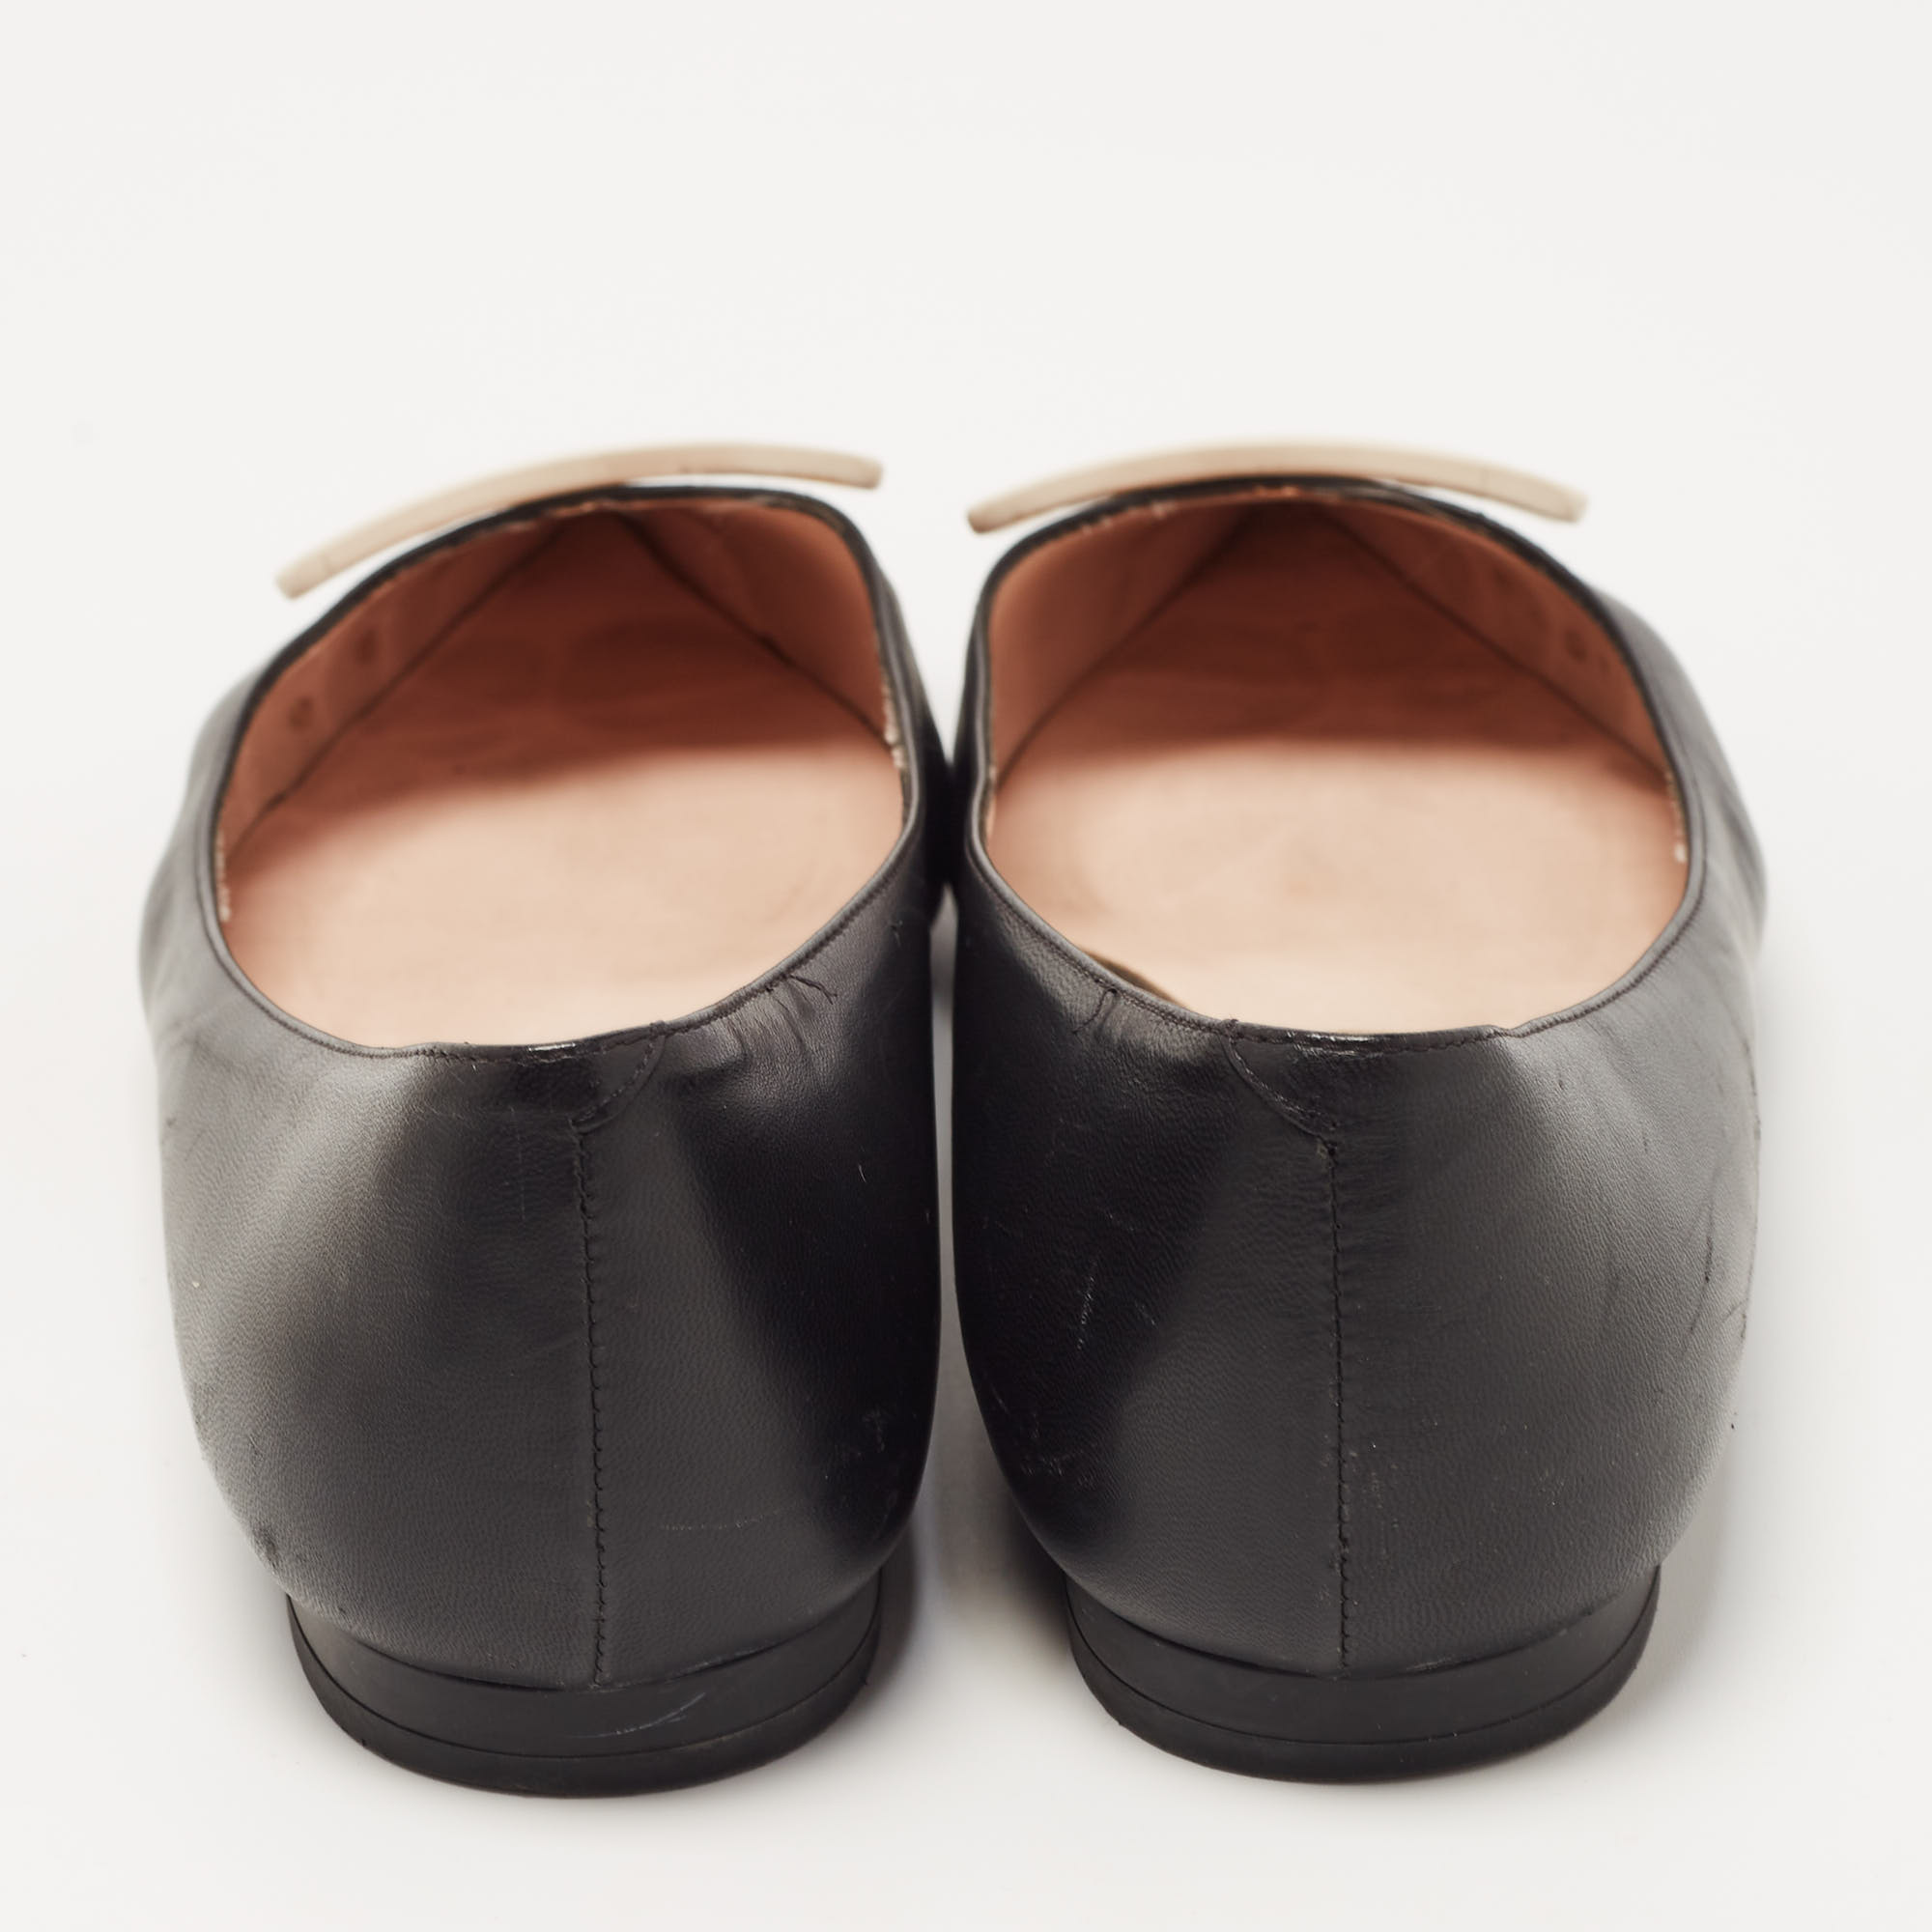 Roger Vivier Black Leather Gommette Ballet Flats Size 37